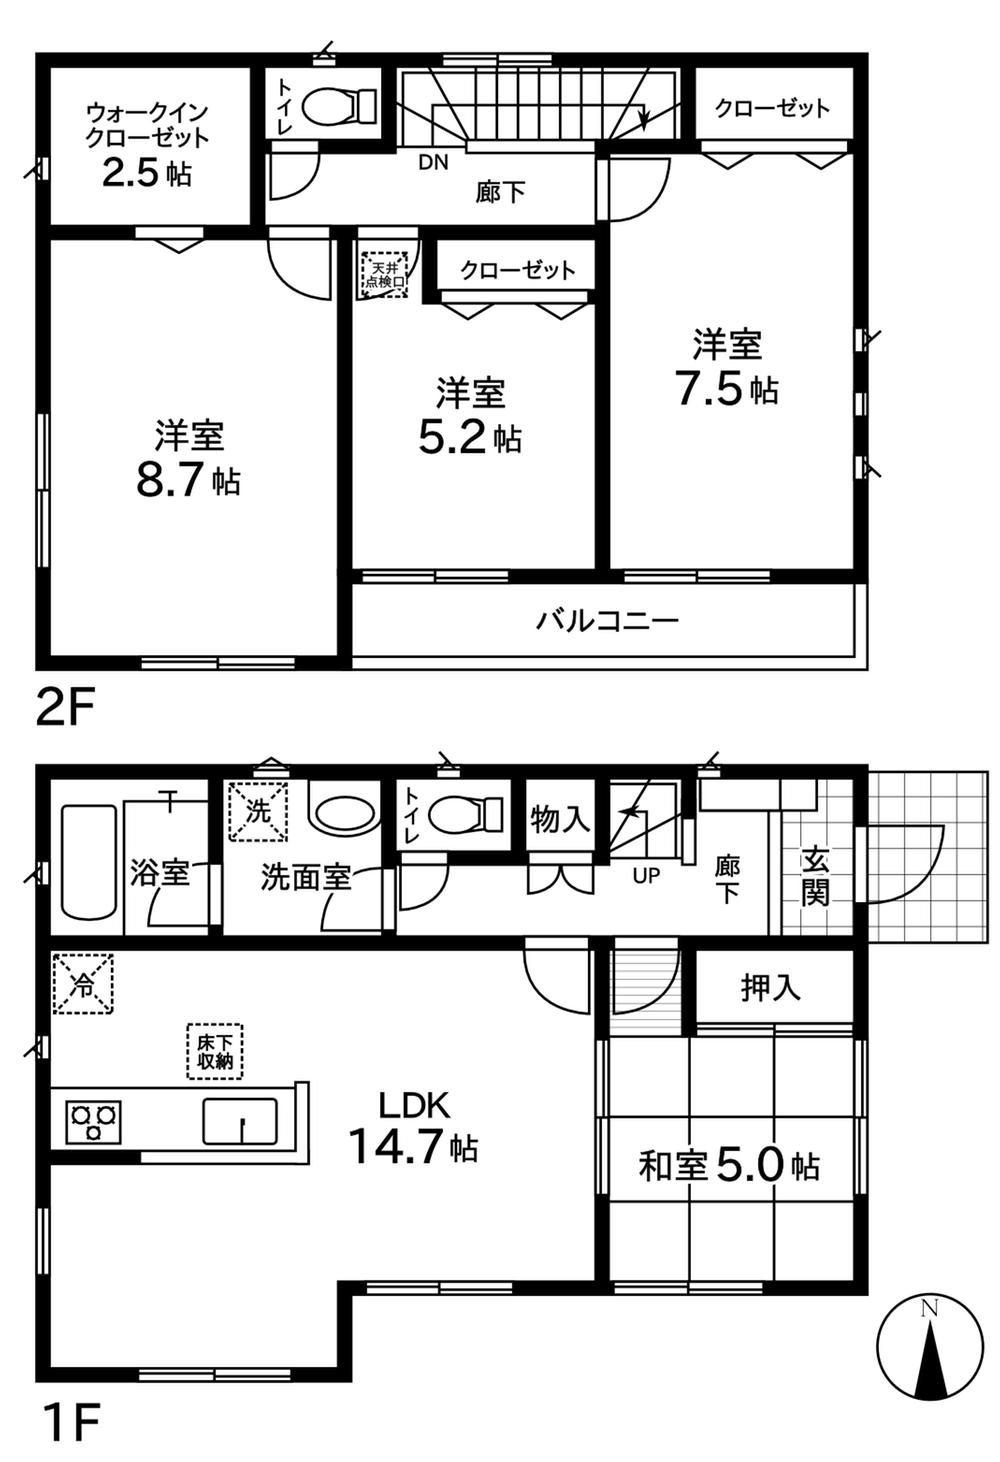 Floor plan. Price 43,800,000 yen, 4LDK+S, Land area 106.53 sq m , Building area 98 sq m